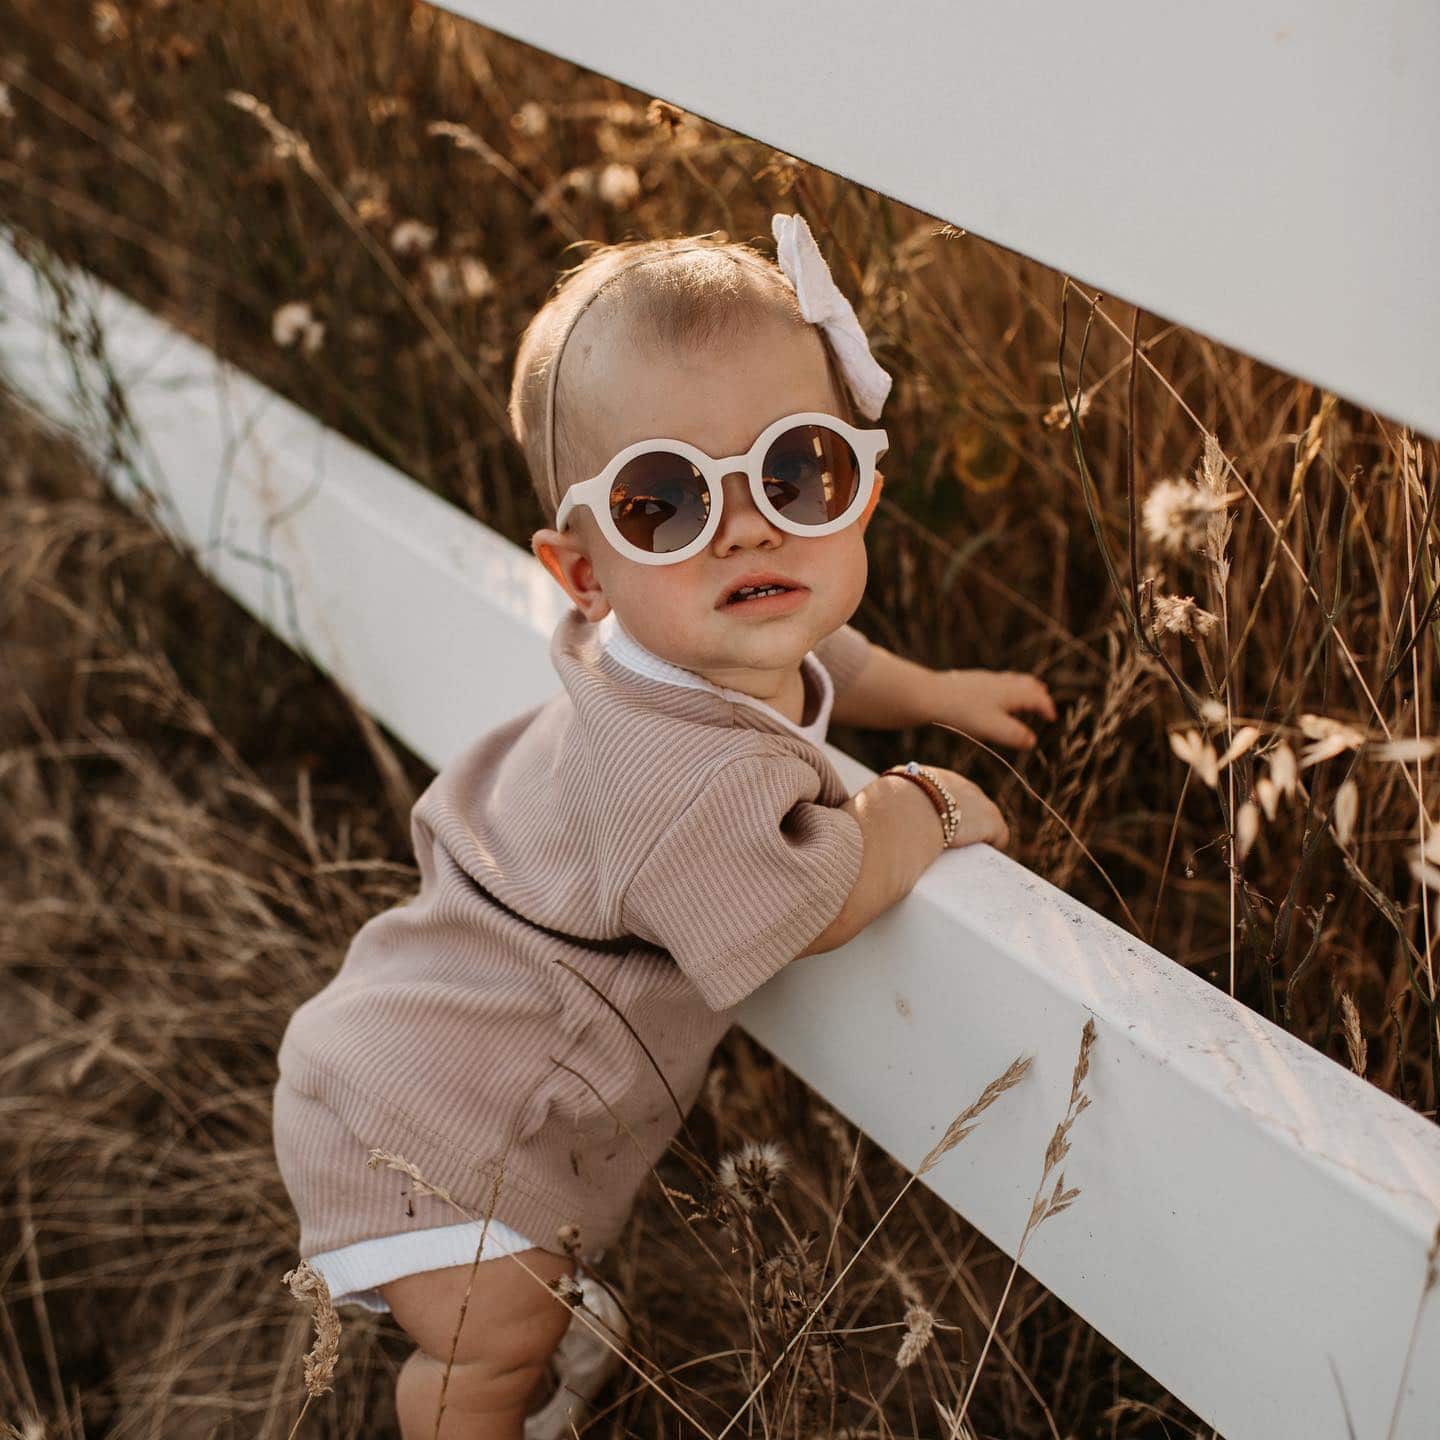 A little girl earing sunglasses